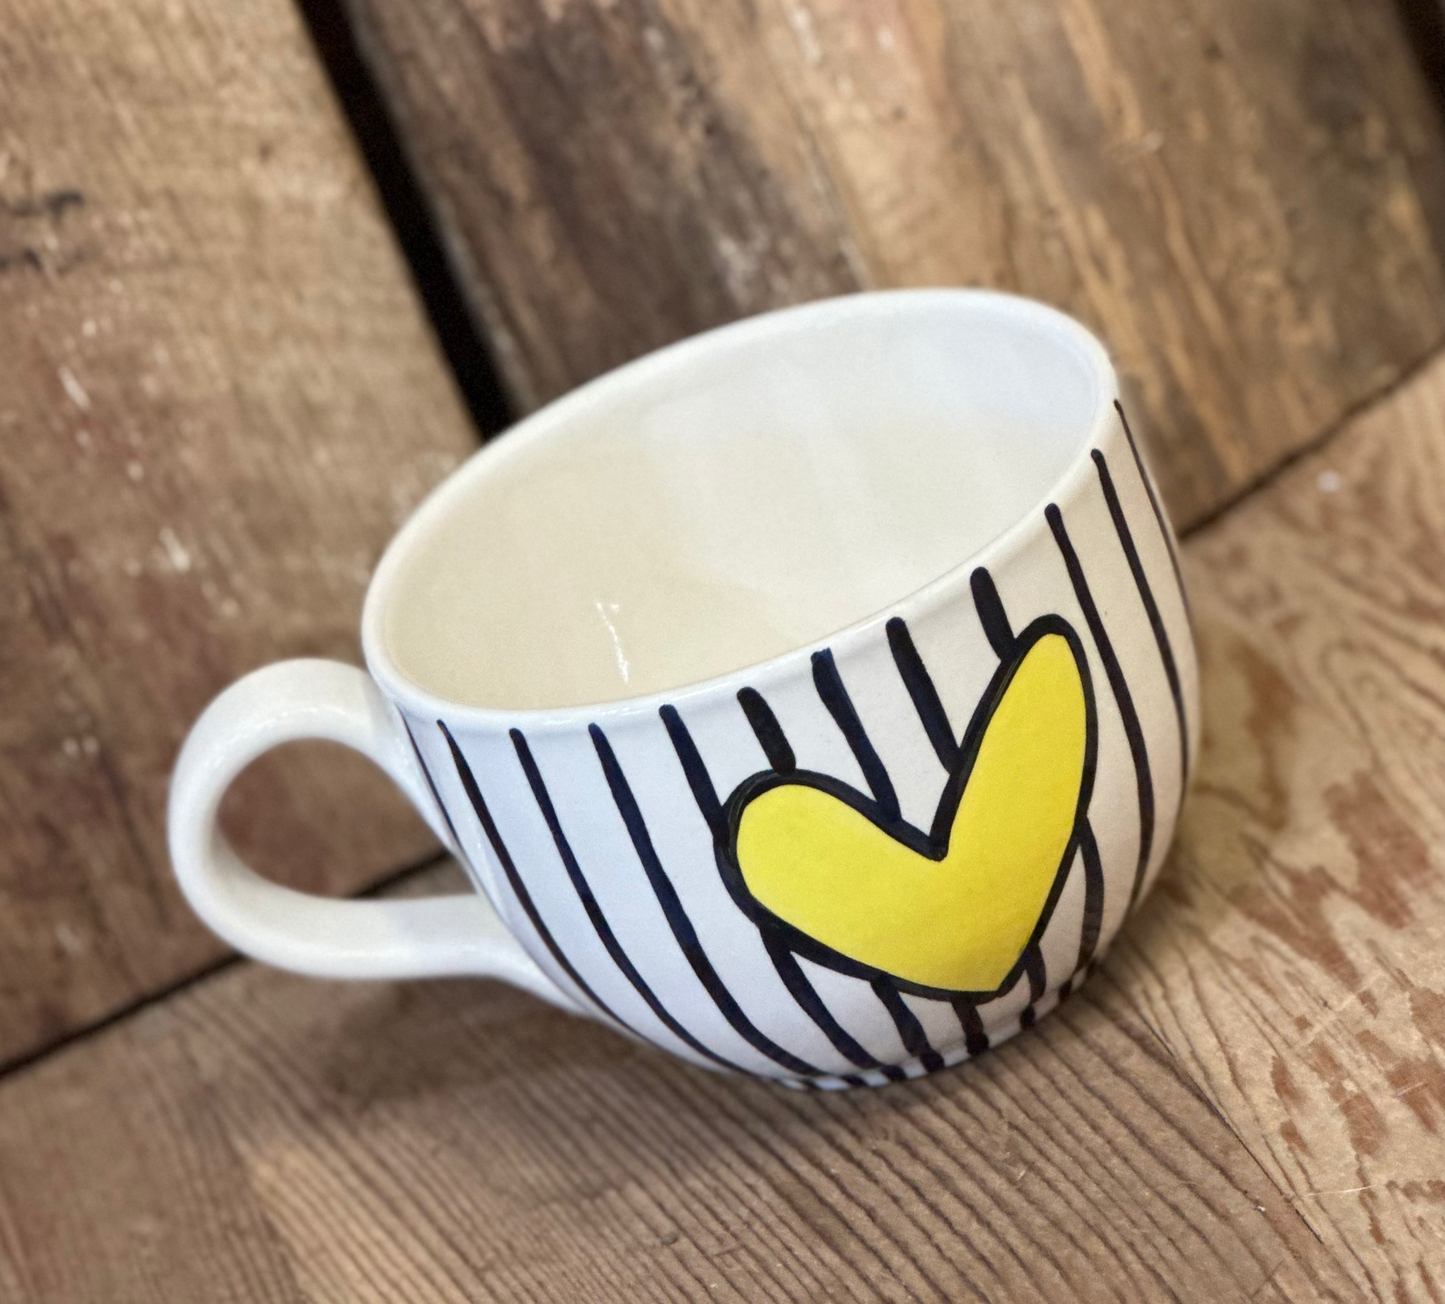 Big Ol' Yellow Heart Mug